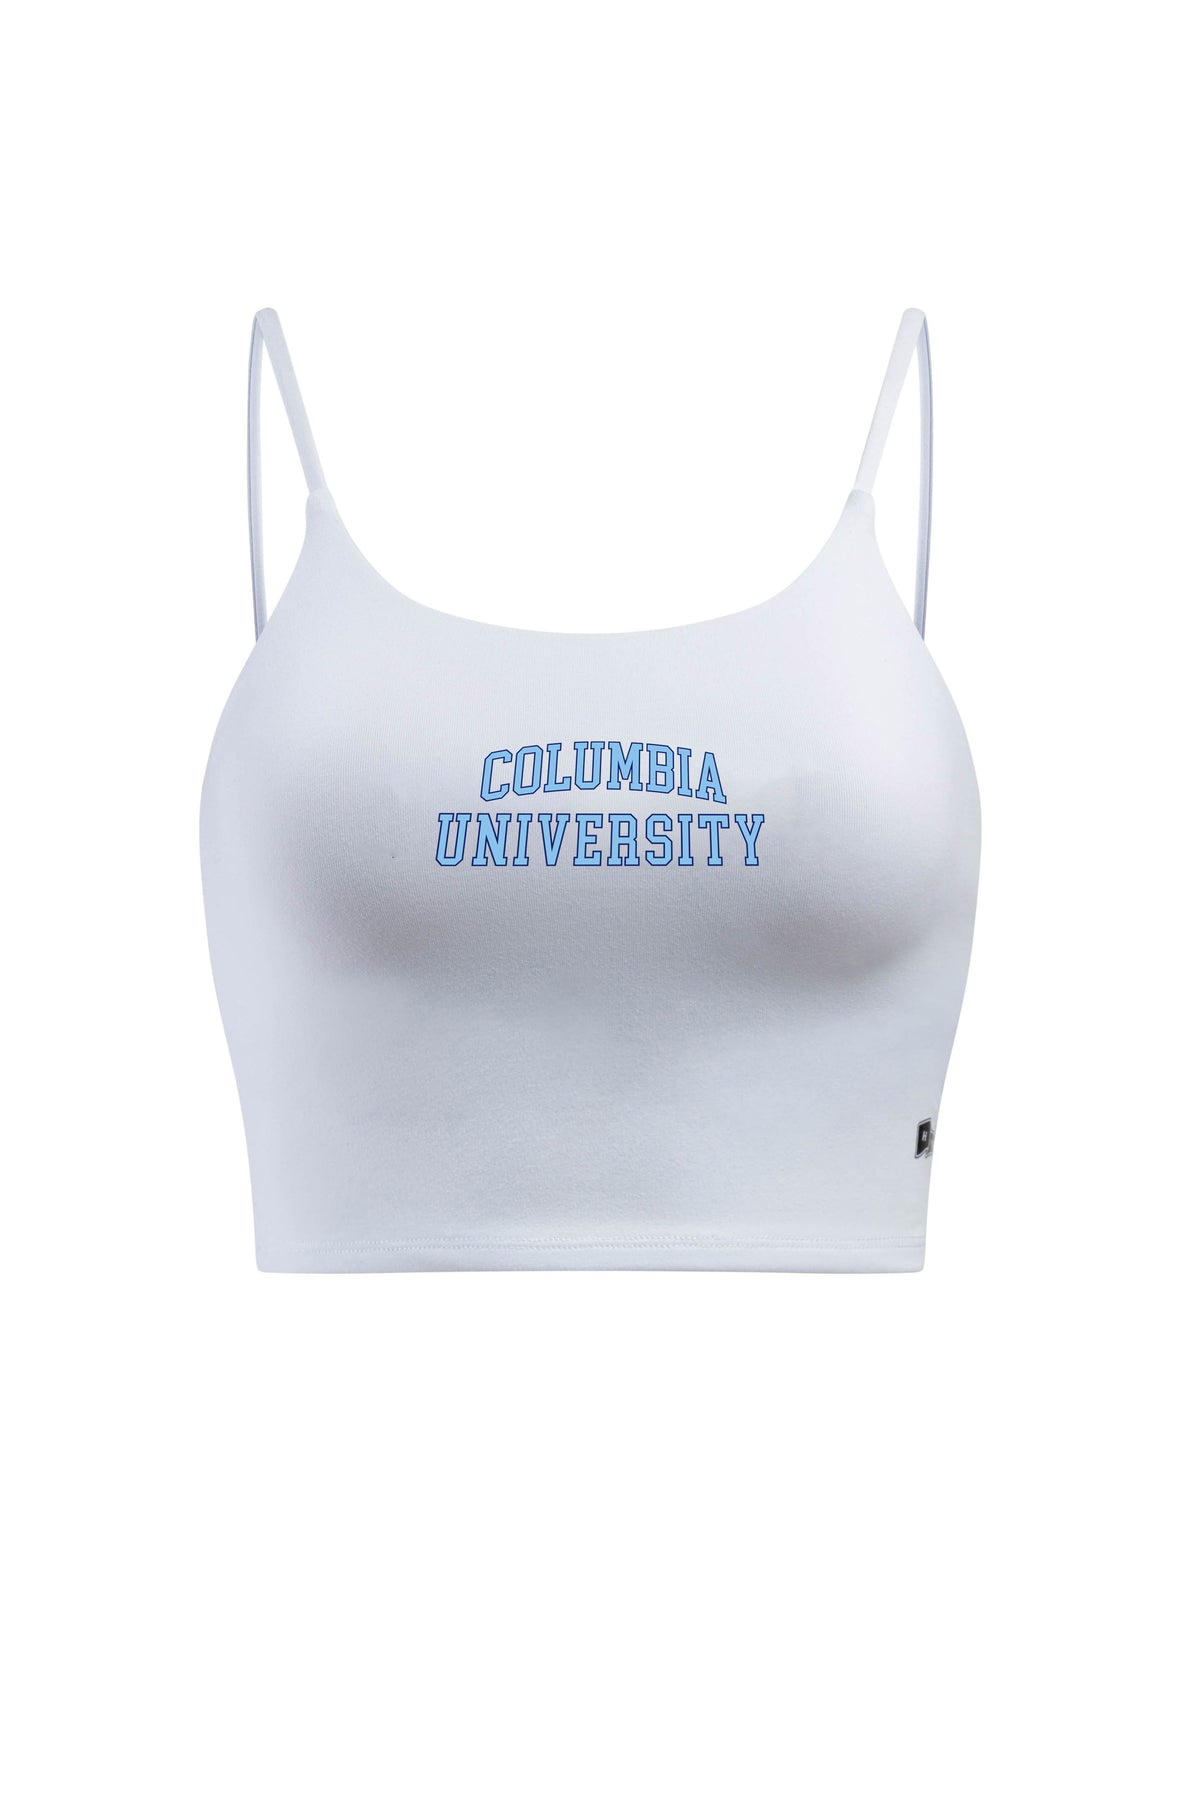 Columbia University Bra Tank Top